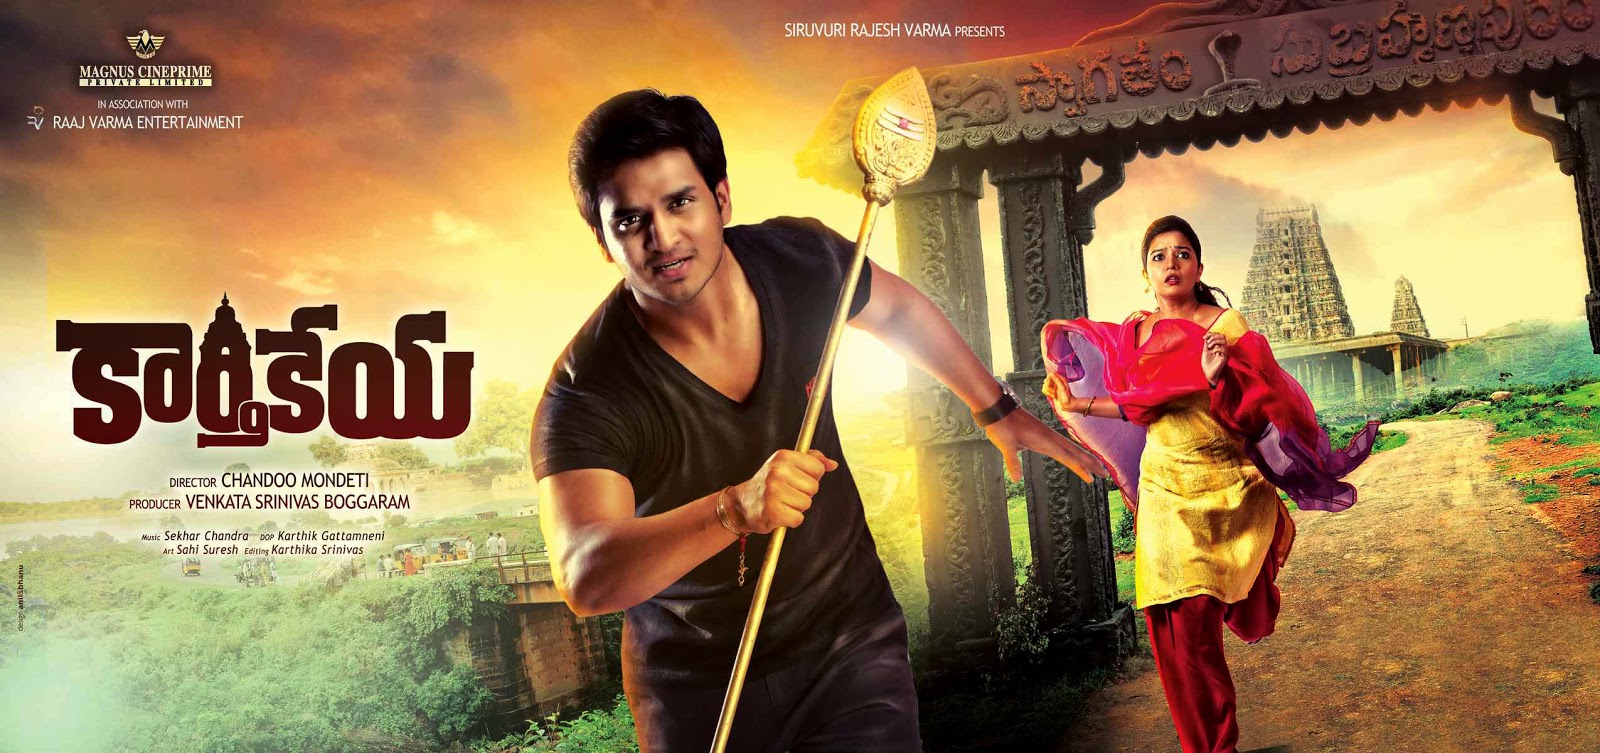 karthikeya 1 movie review in tamil